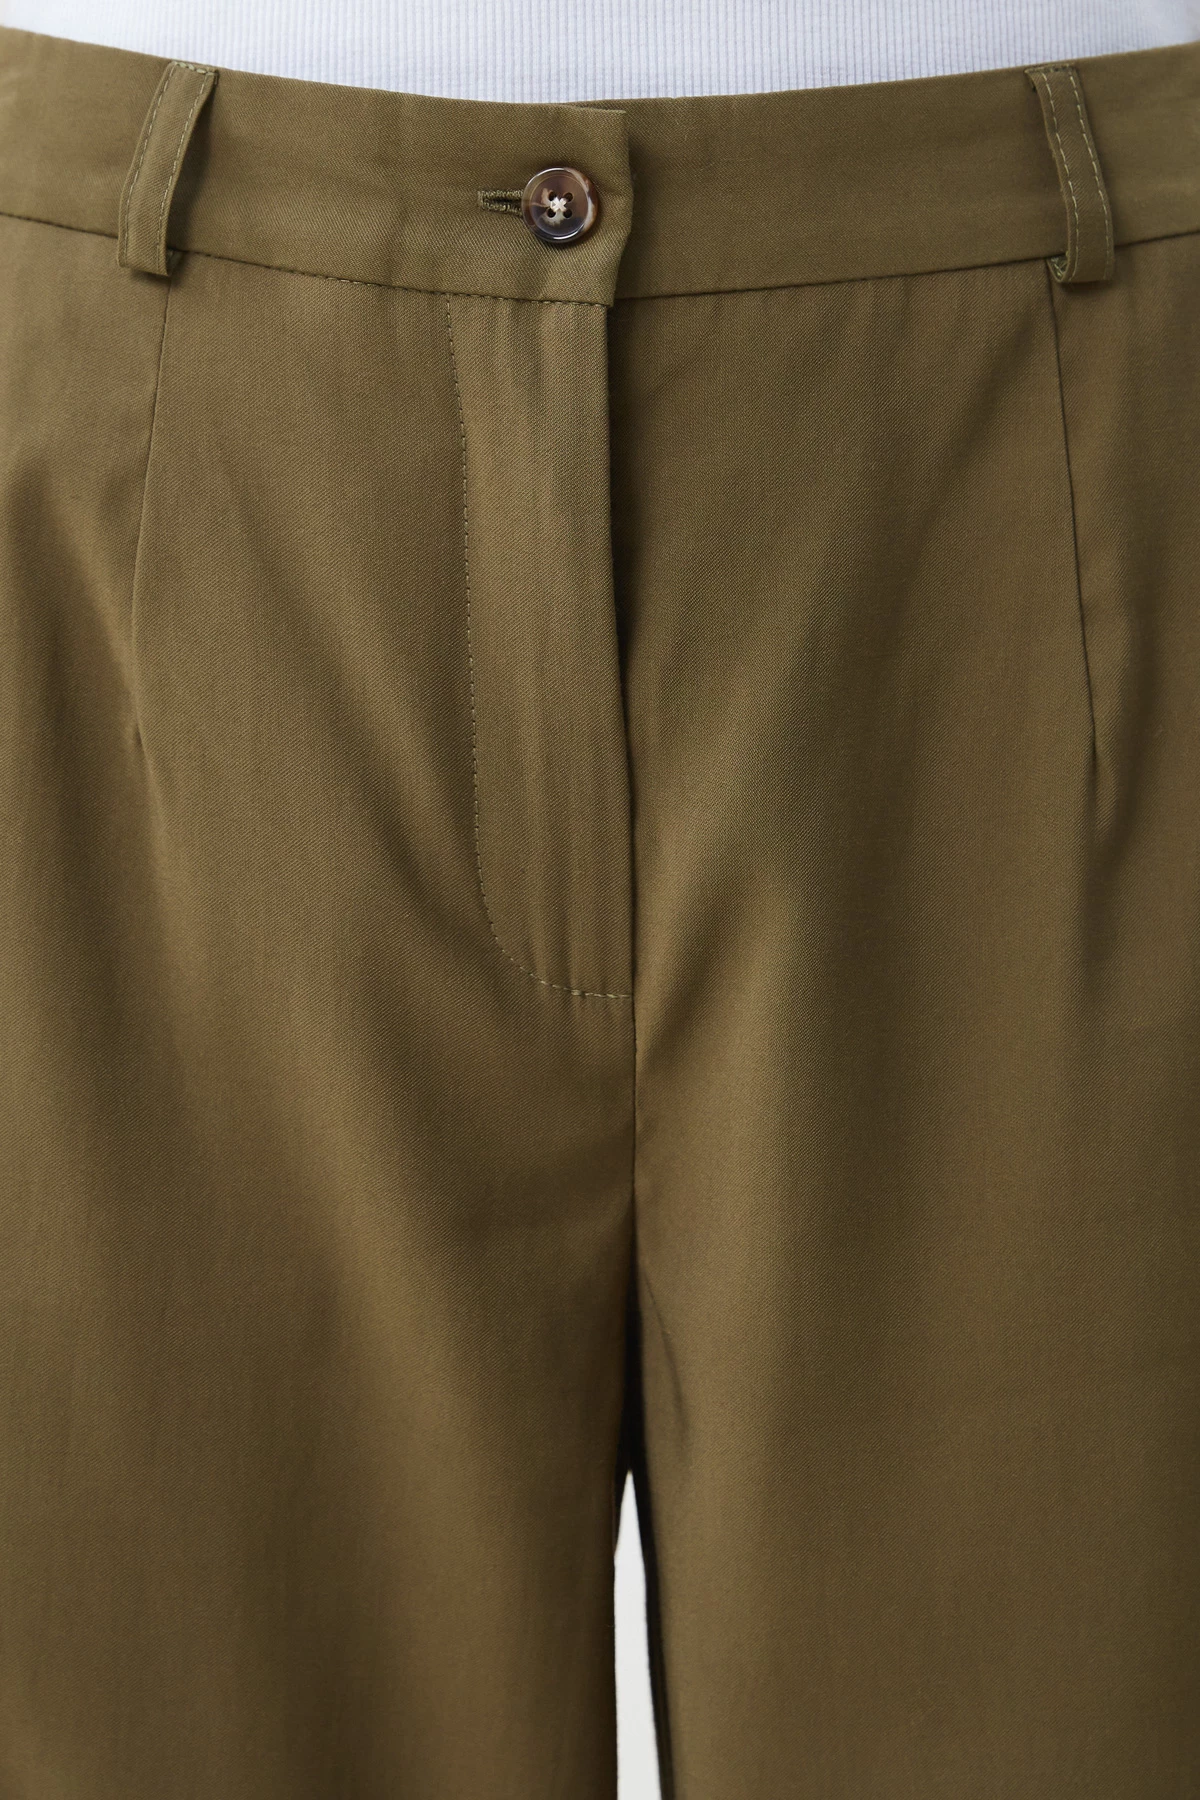 Shortened khaki pants made of suit fabric with viscose, photo 4